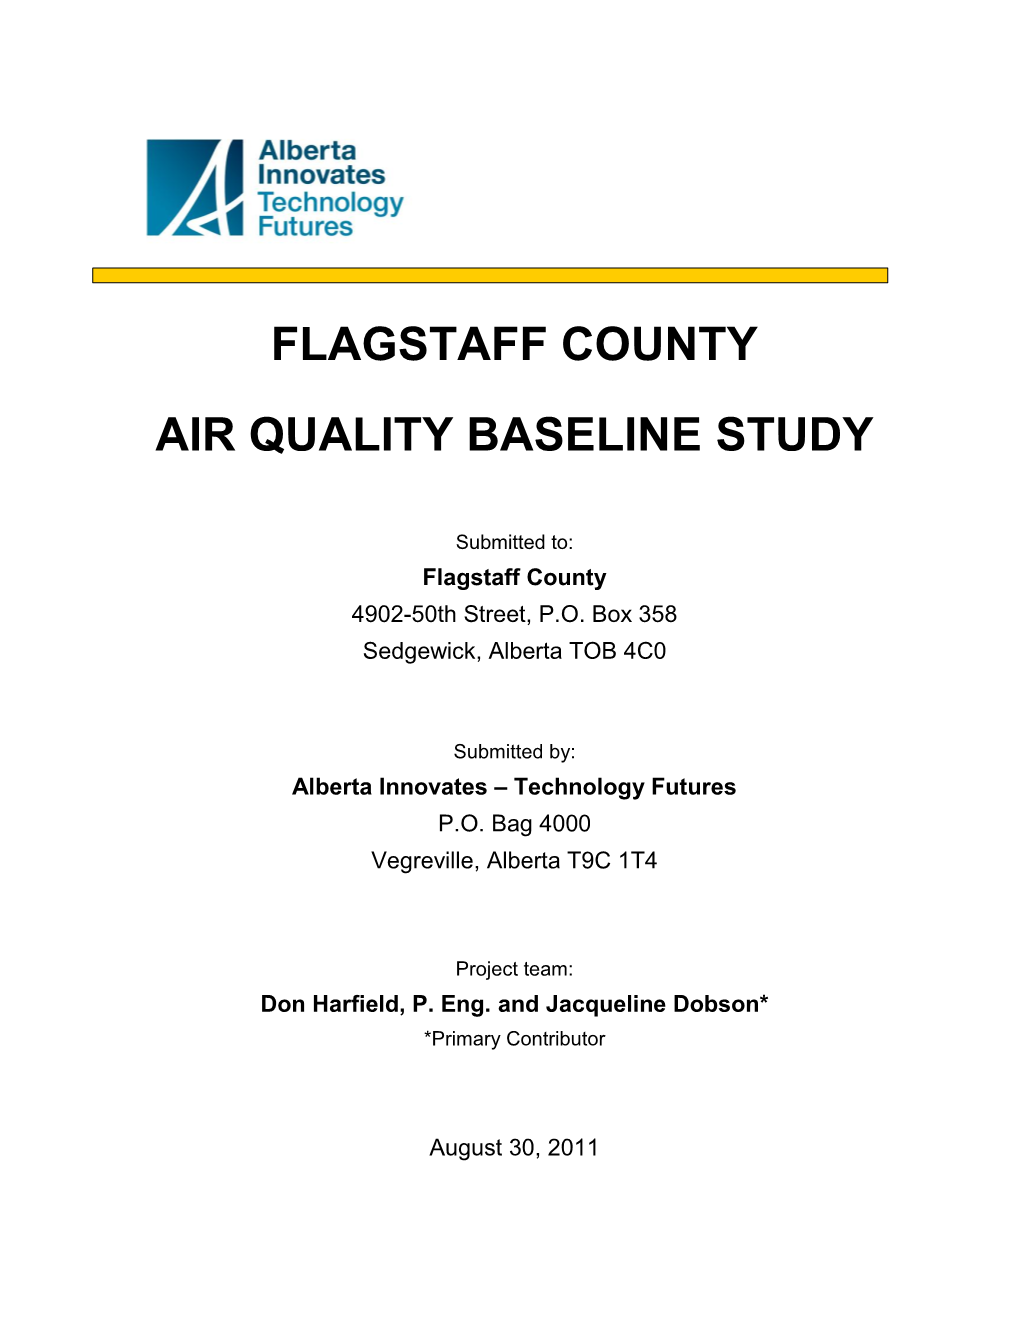 Flagstaff County Air Quality Baseline Study